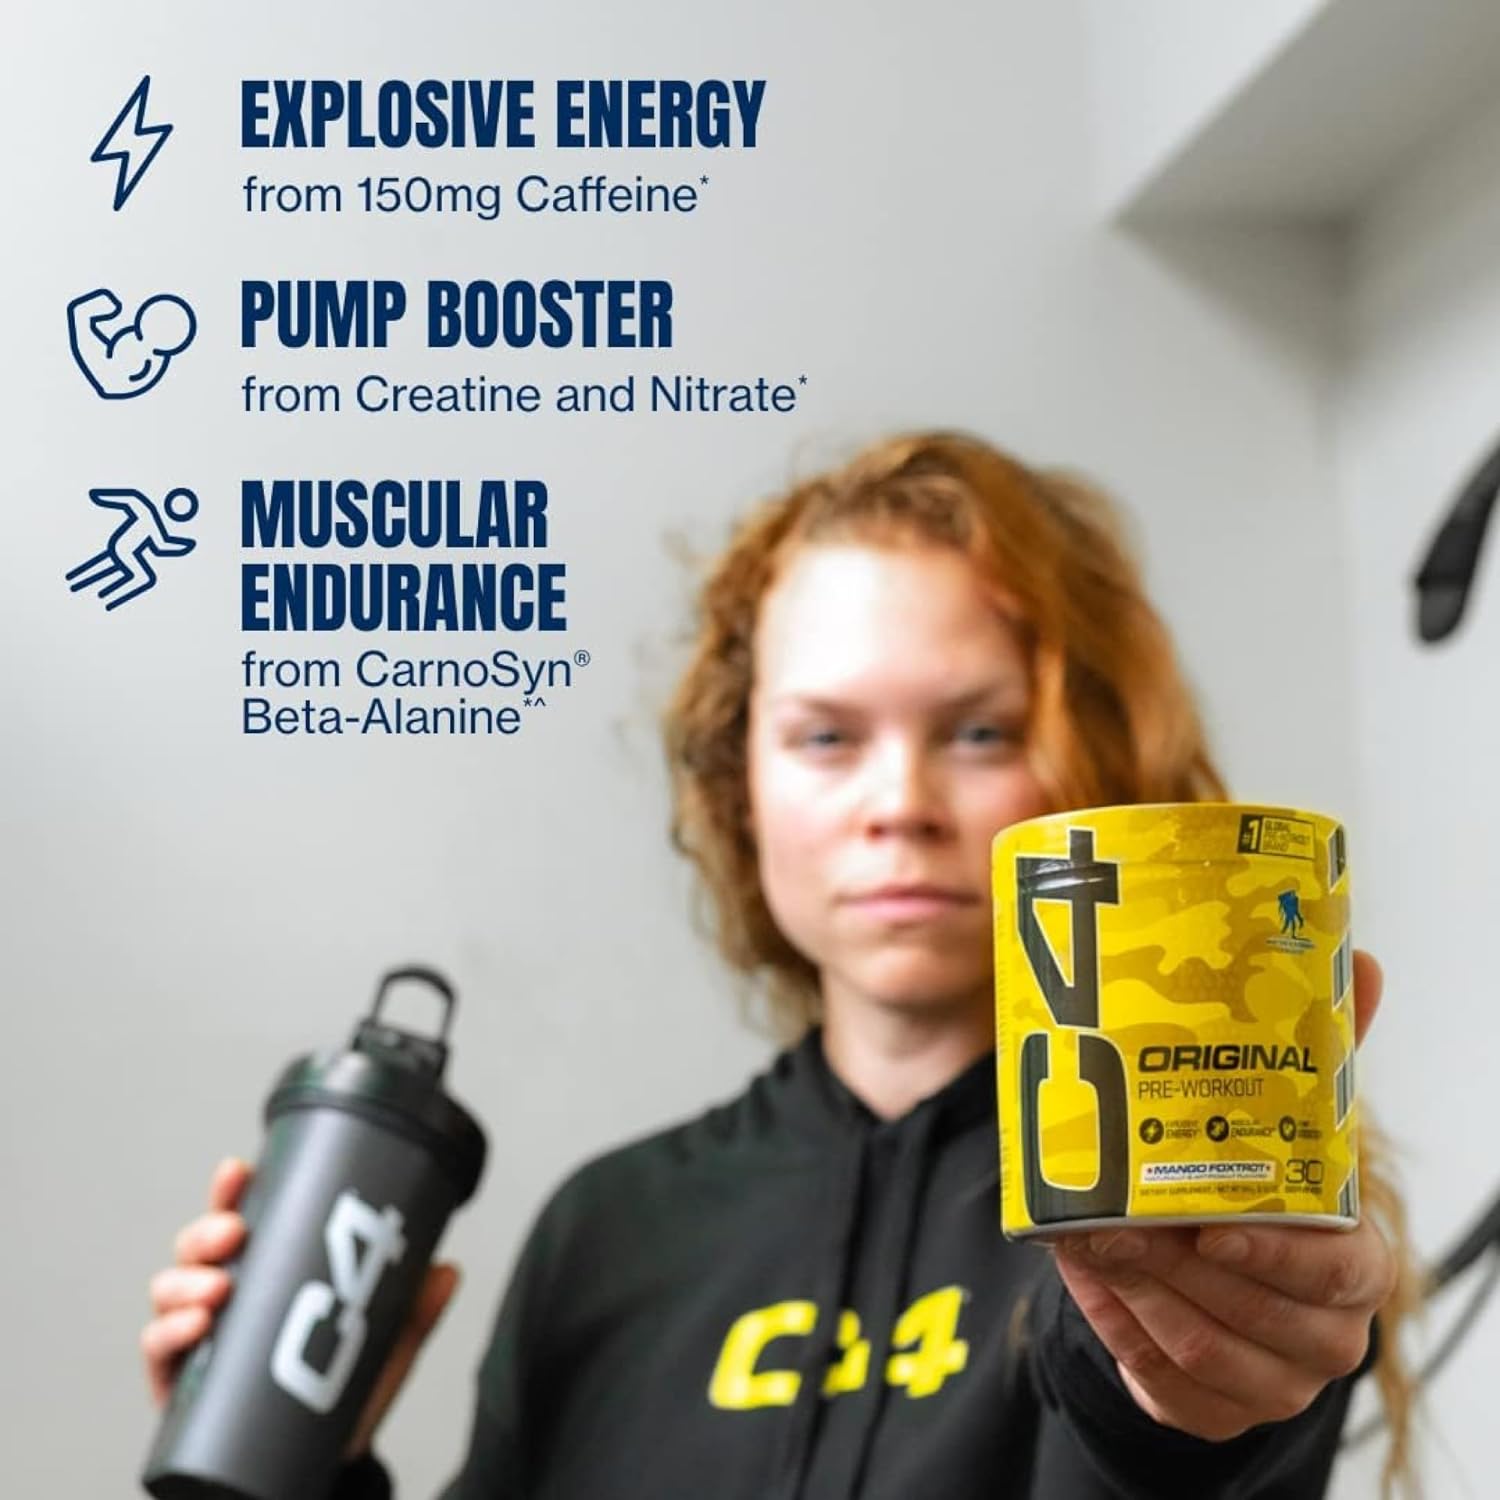 Cellucor C4 Original Pre Workout Powder Mango Foxtrot Sugar Free Preworkout Energy for Men & Women 150mg Caffeine + Beta Alanine + Creatine - 30 Servings (Packaging May Vary) : Health & Household